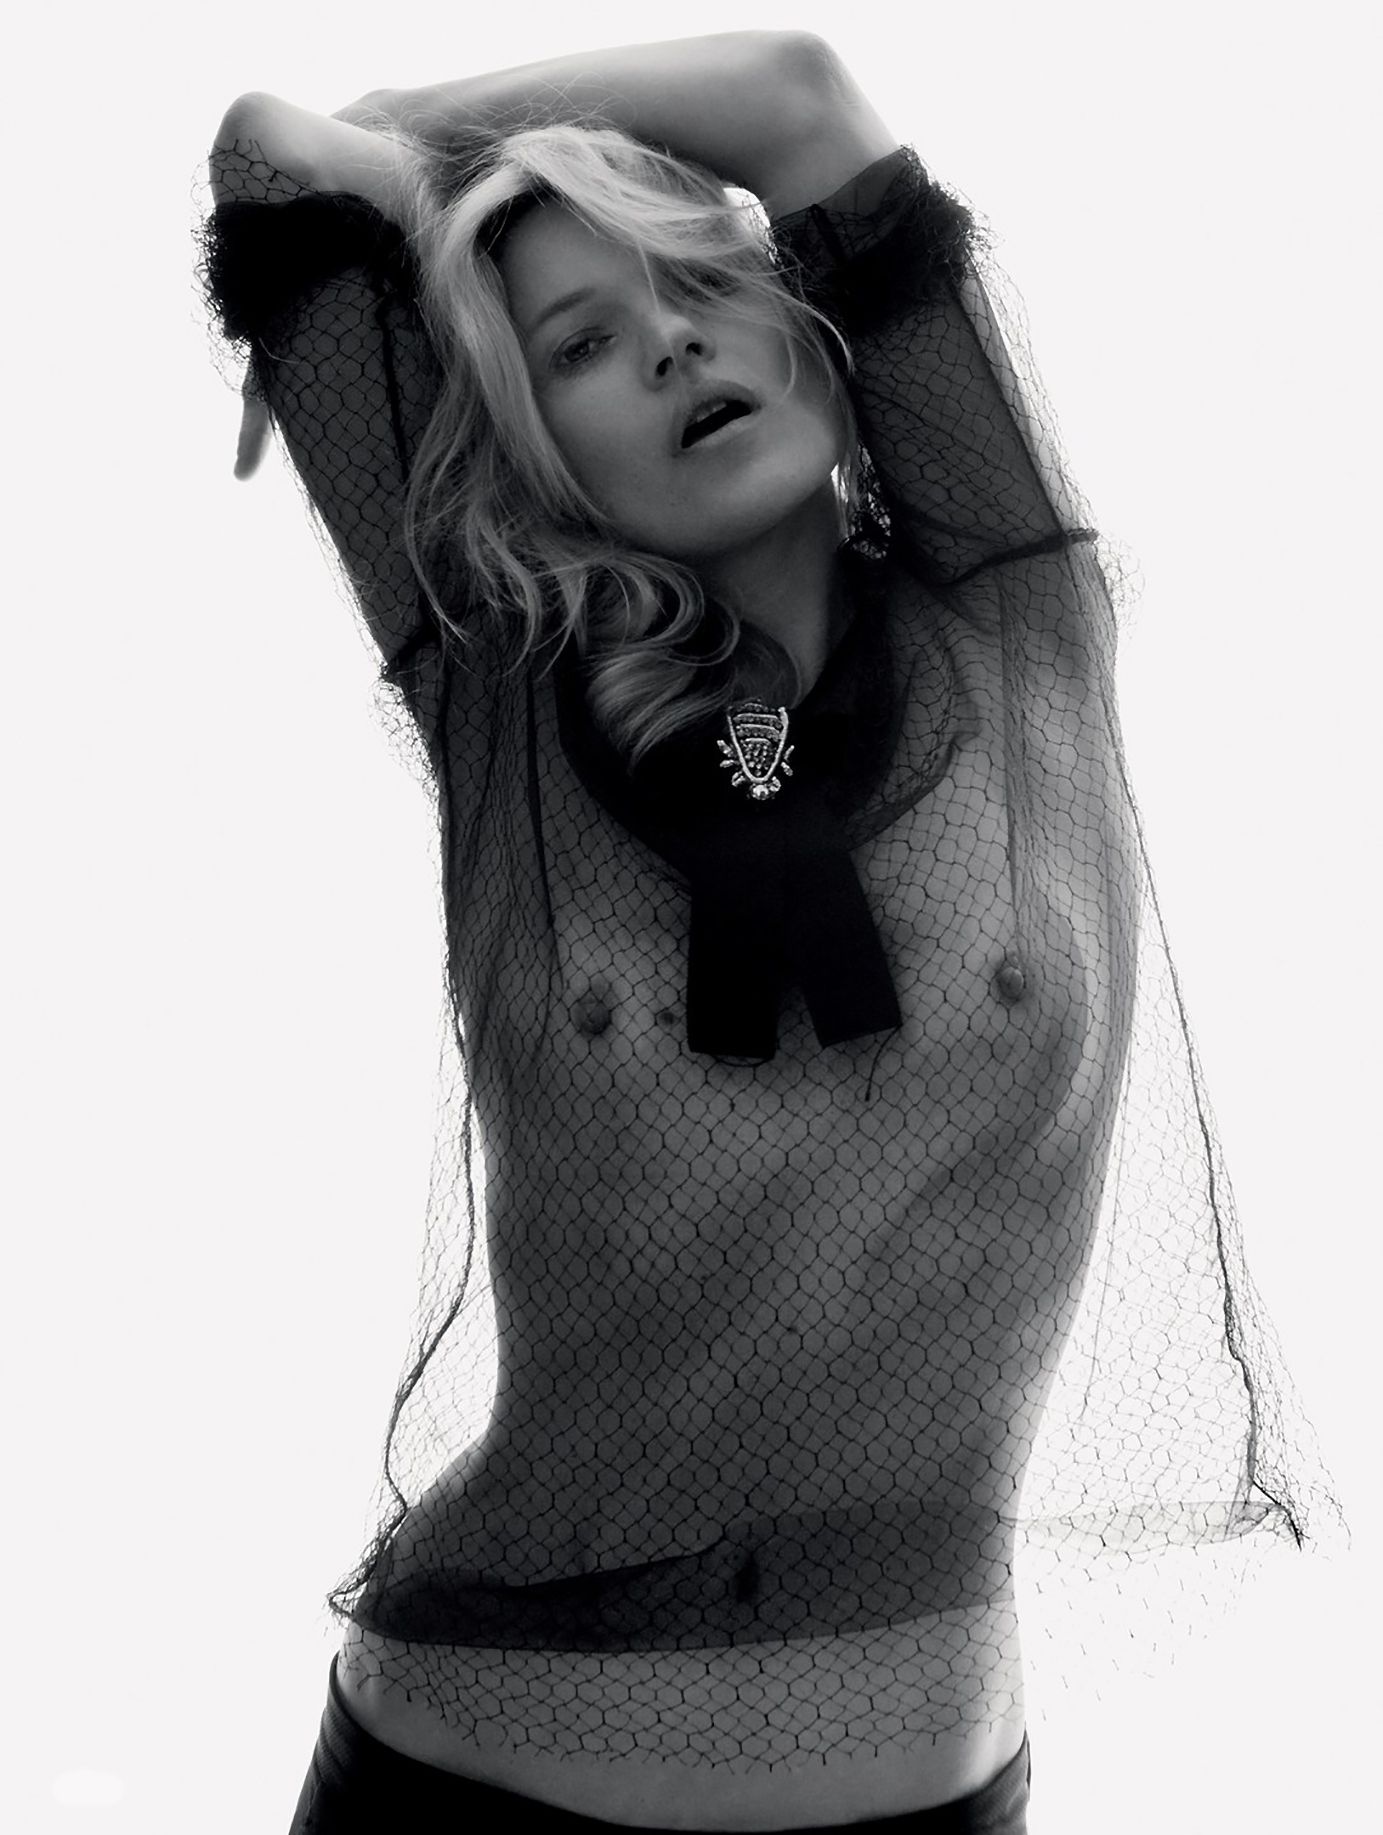 Kate Moss See-Through pics